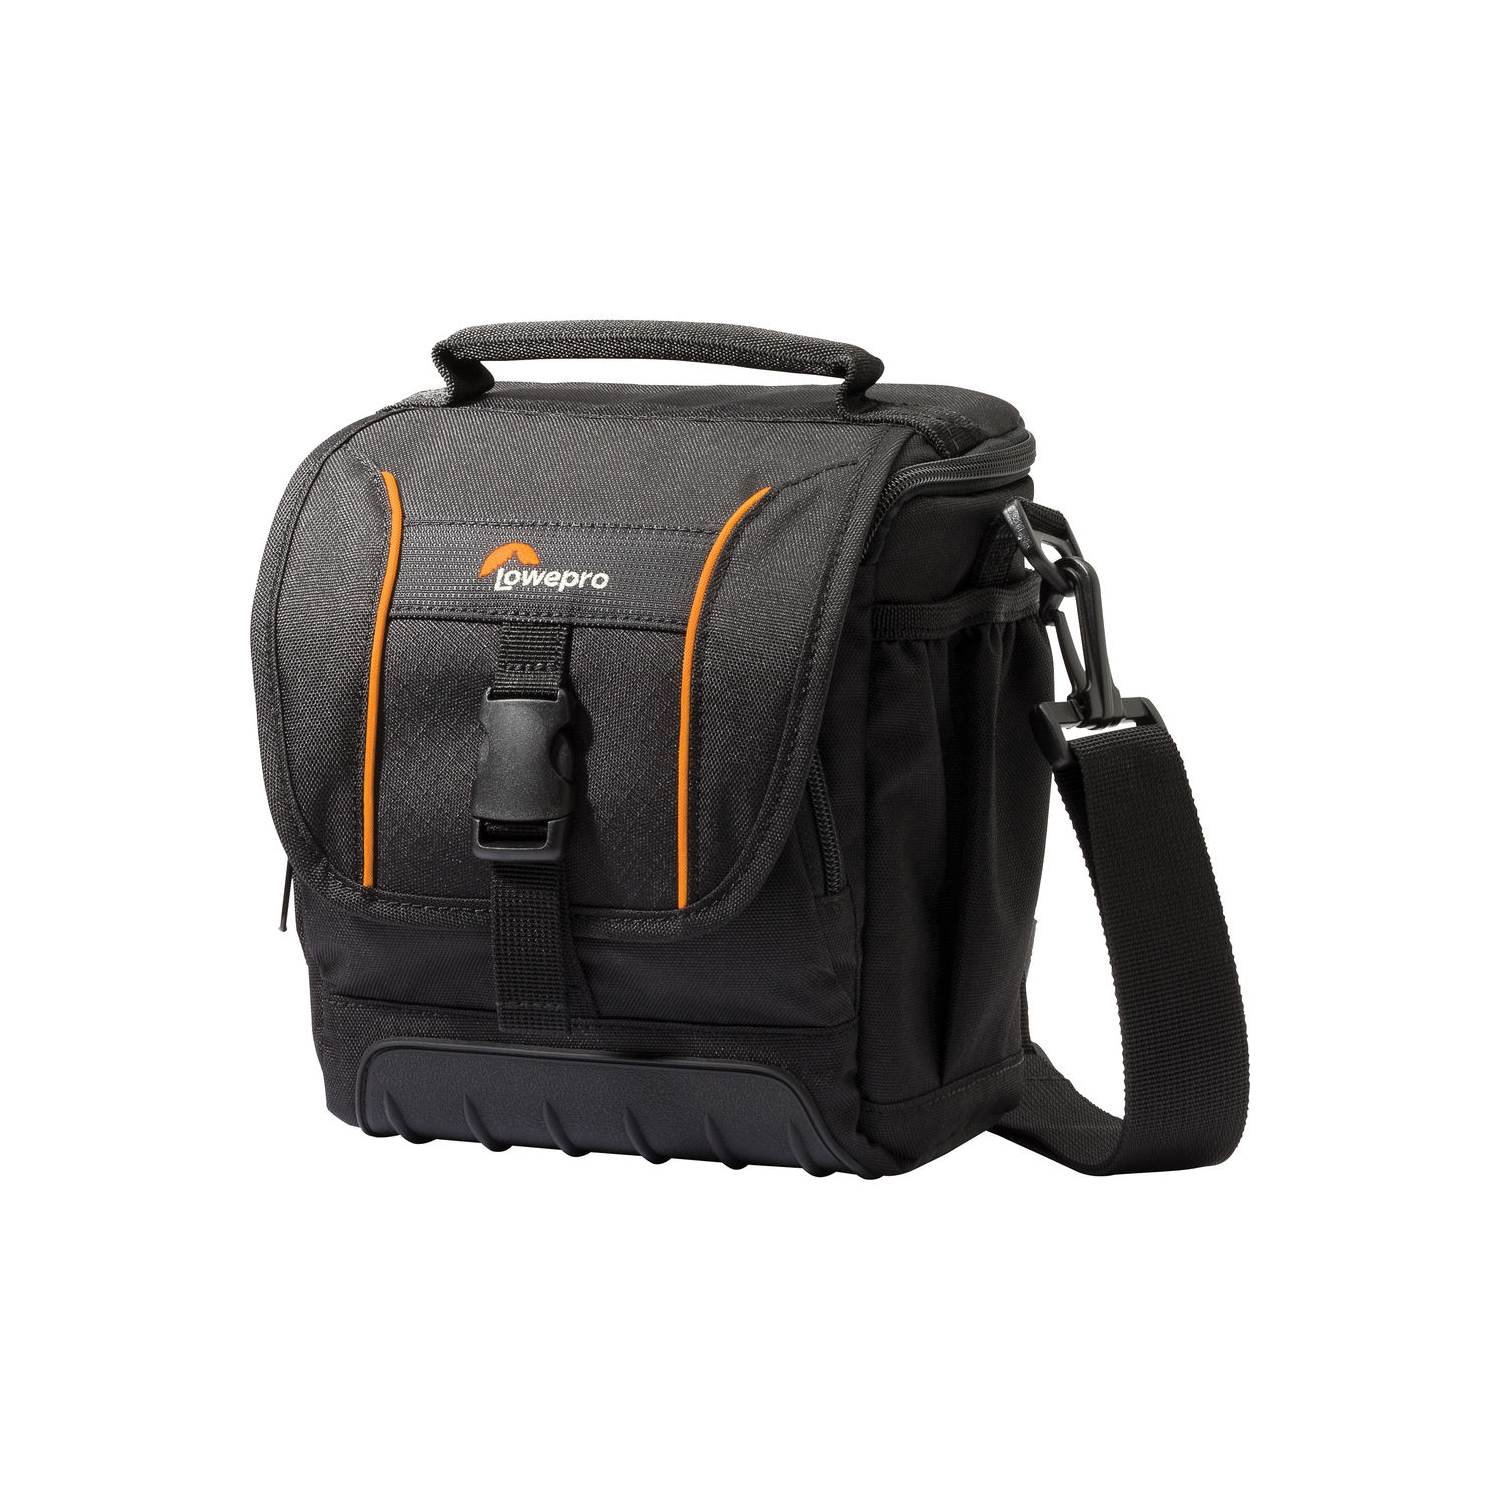 Lowepro Adventura Shoulder Bag SH 140 II